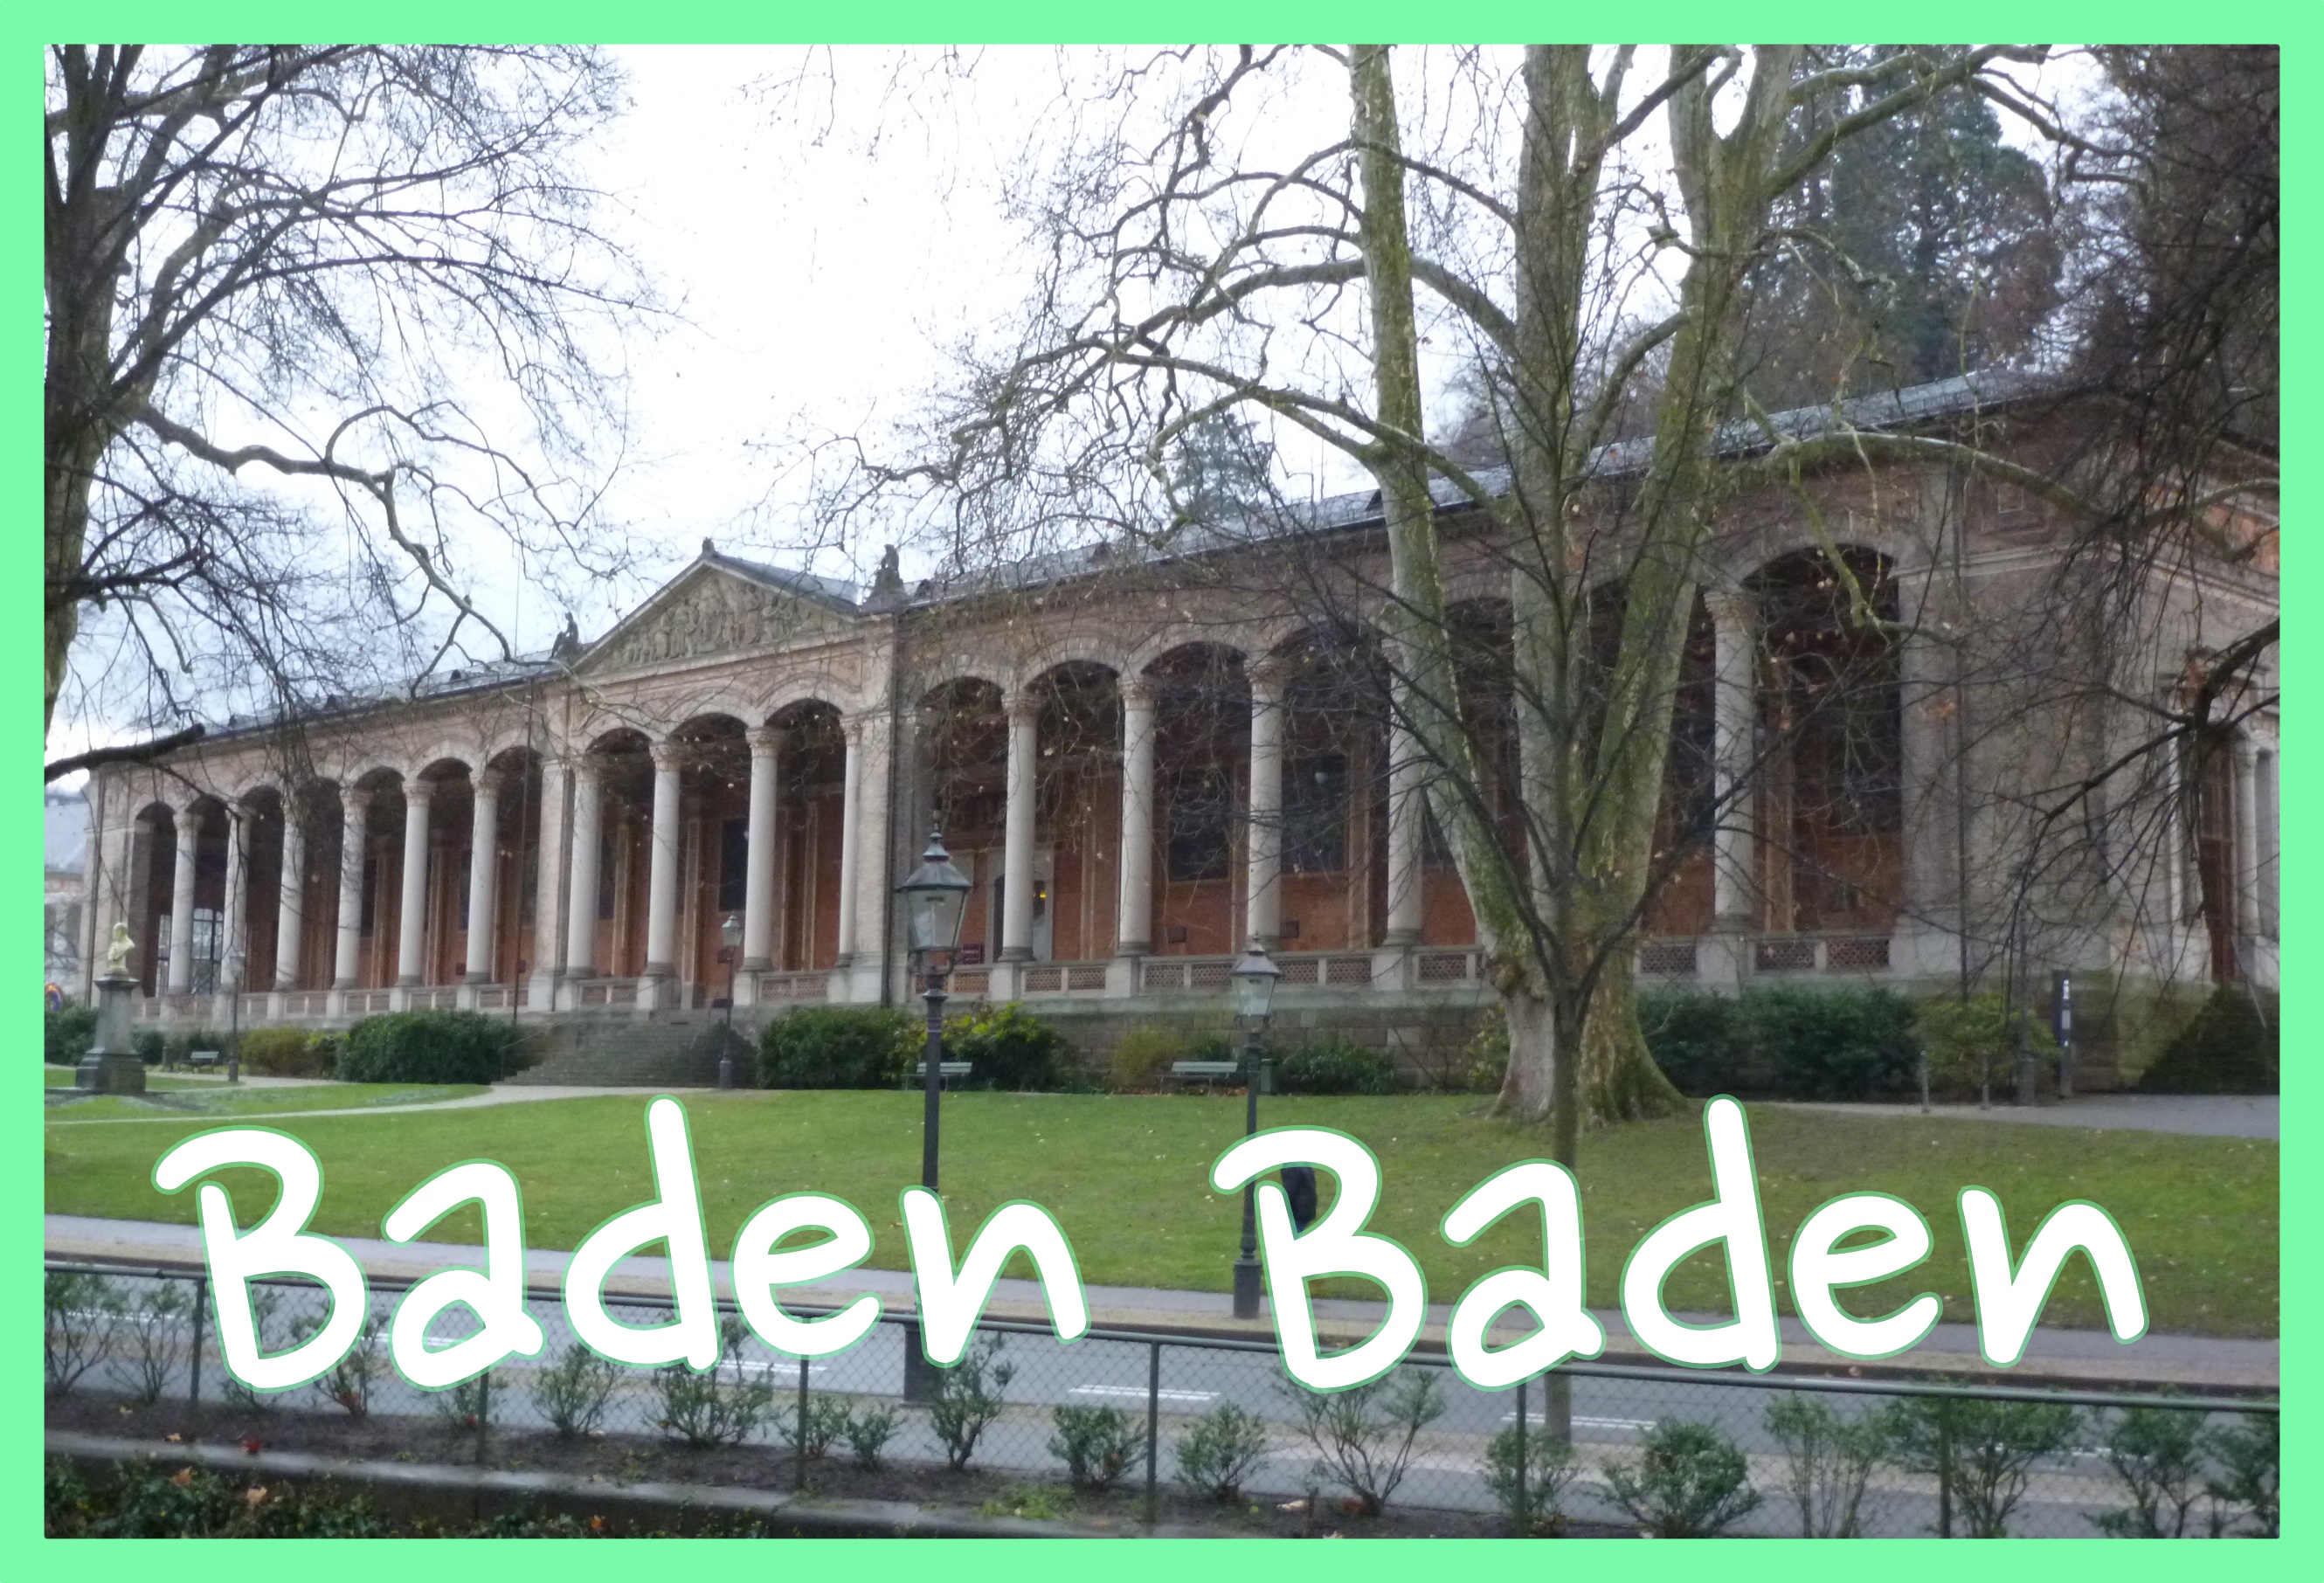 BadenBaden